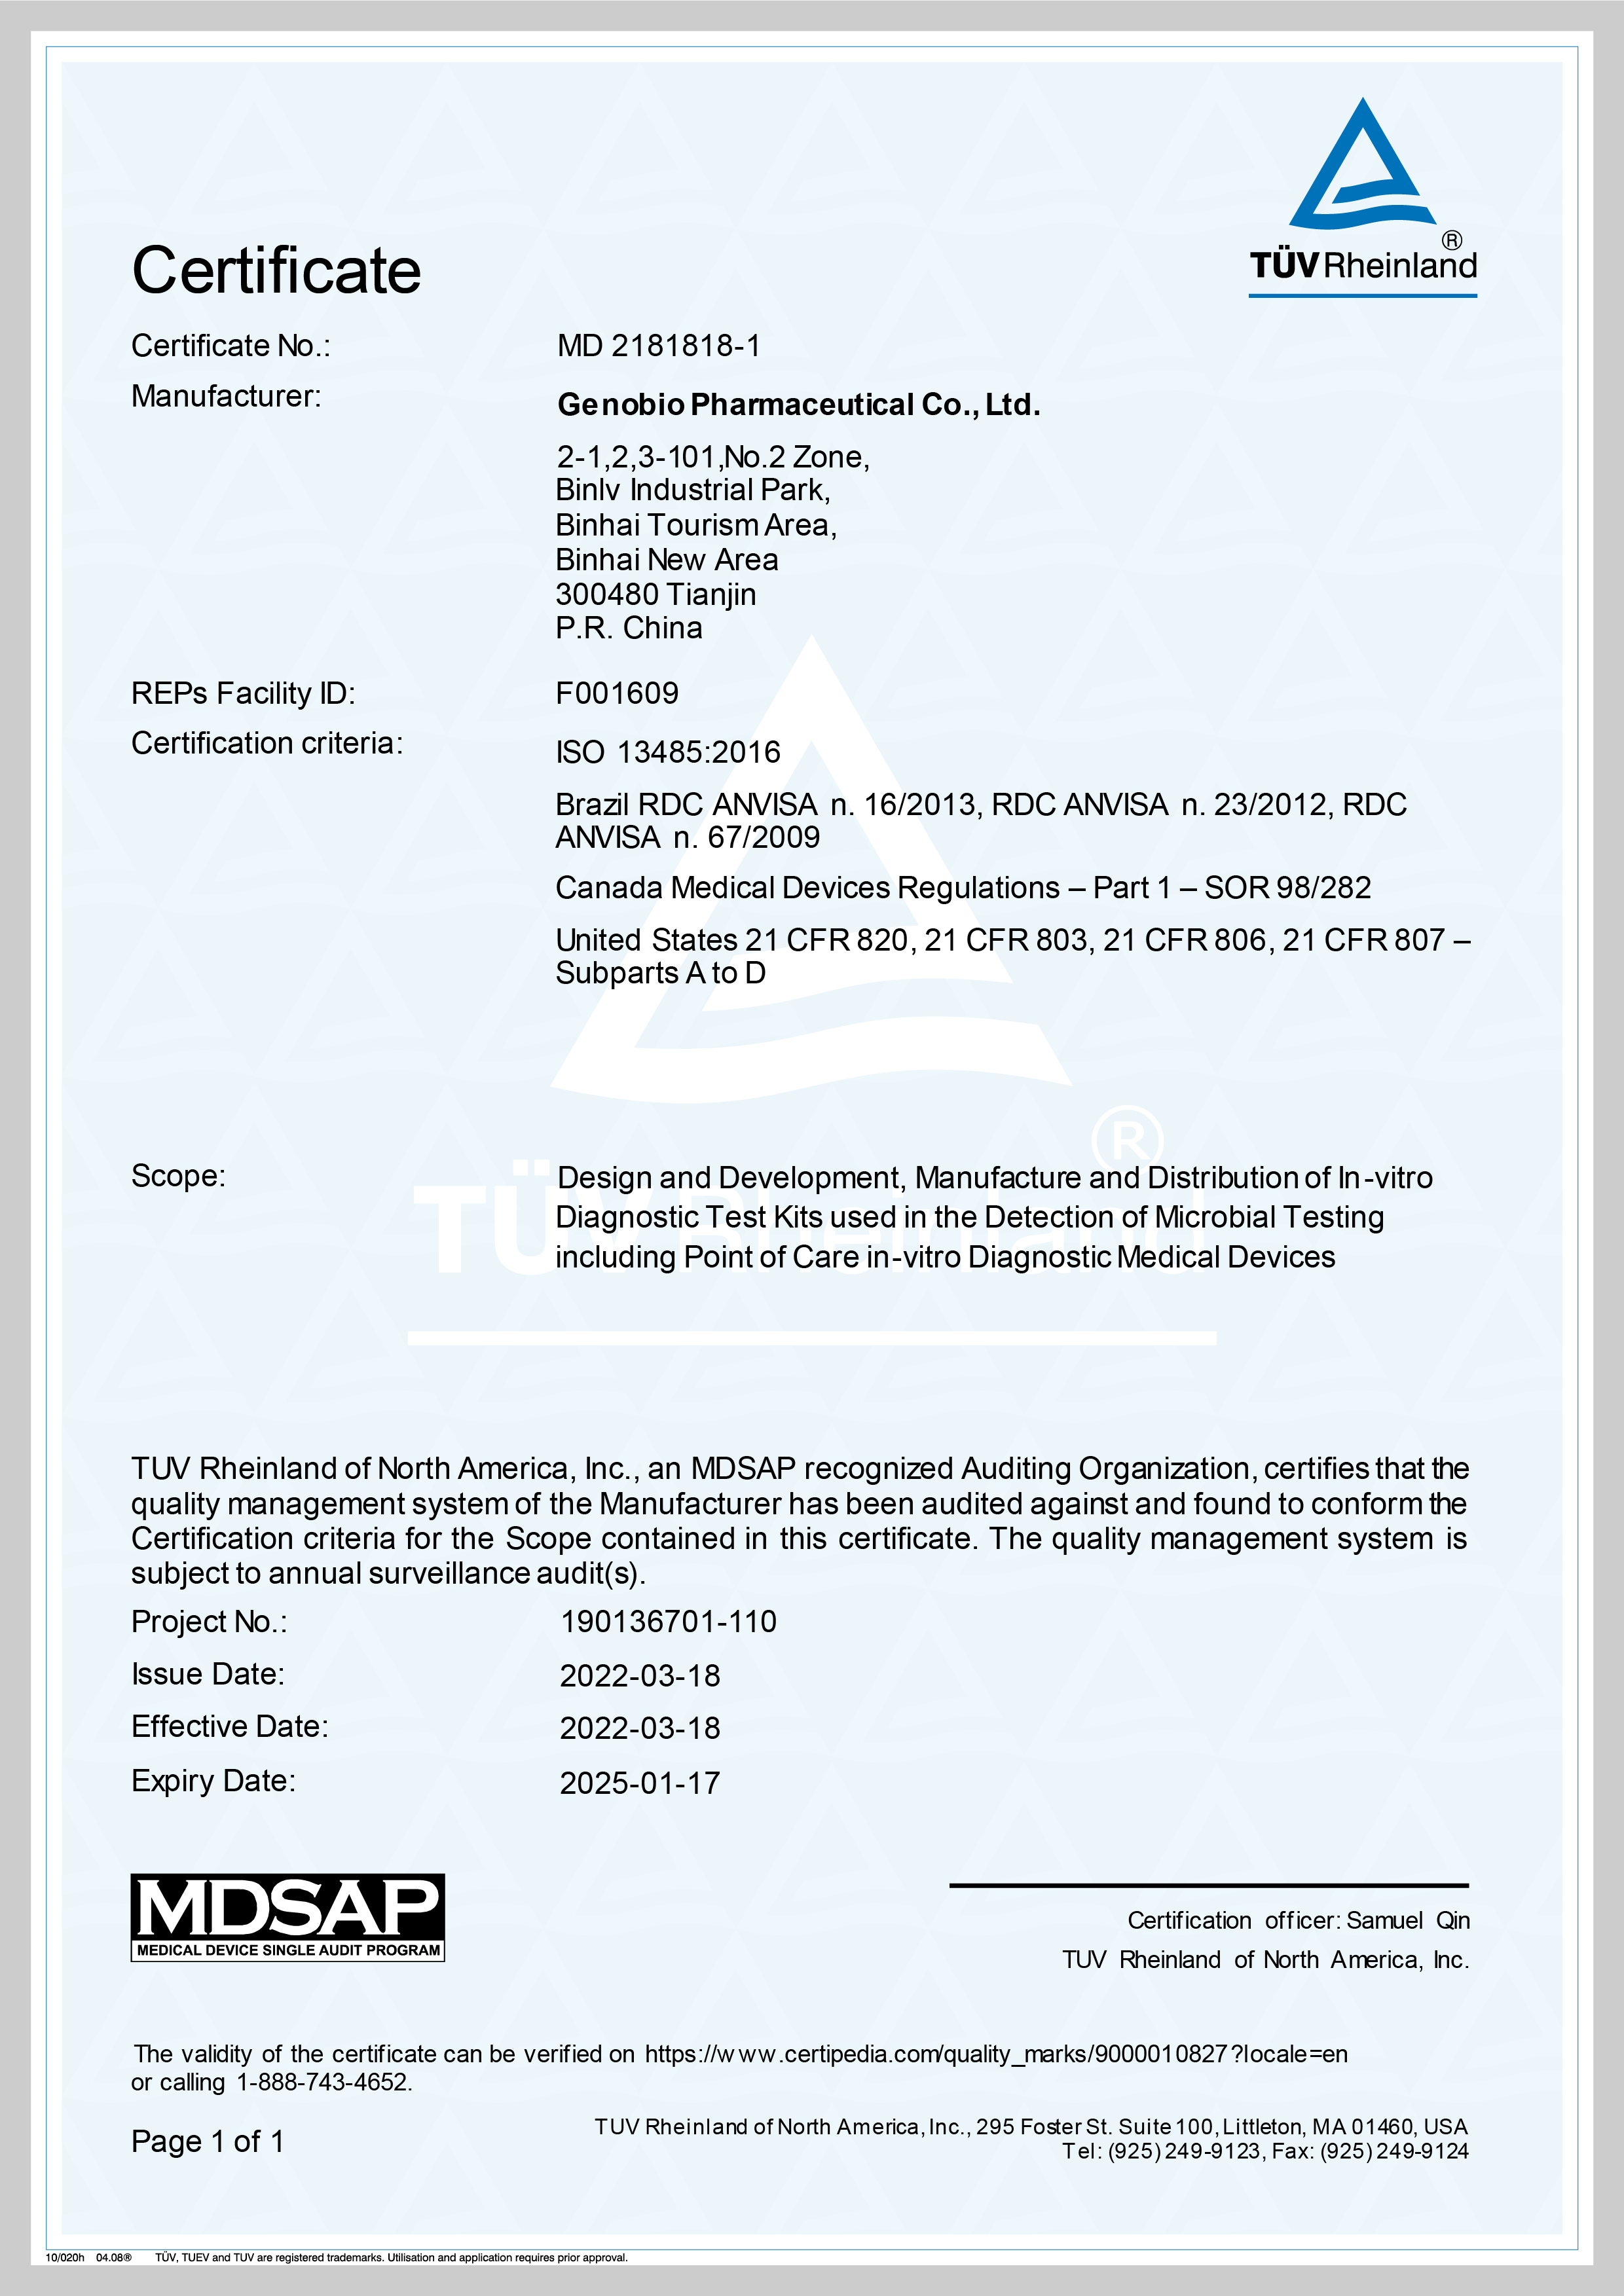 Genobio သည် MDSAP အသိအမှတ်ပြုလက်မှတ်ကိုရရှိသည်—ဆေးဘက်ဆိုင်ရာကိရိယာထုတ်လုပ်သည့်စက်မှုလုပ်ငန်းတွင်အမြင့်ဆုံးစည်းမျဉ်းစည်းကမ်းစံနှုန်း